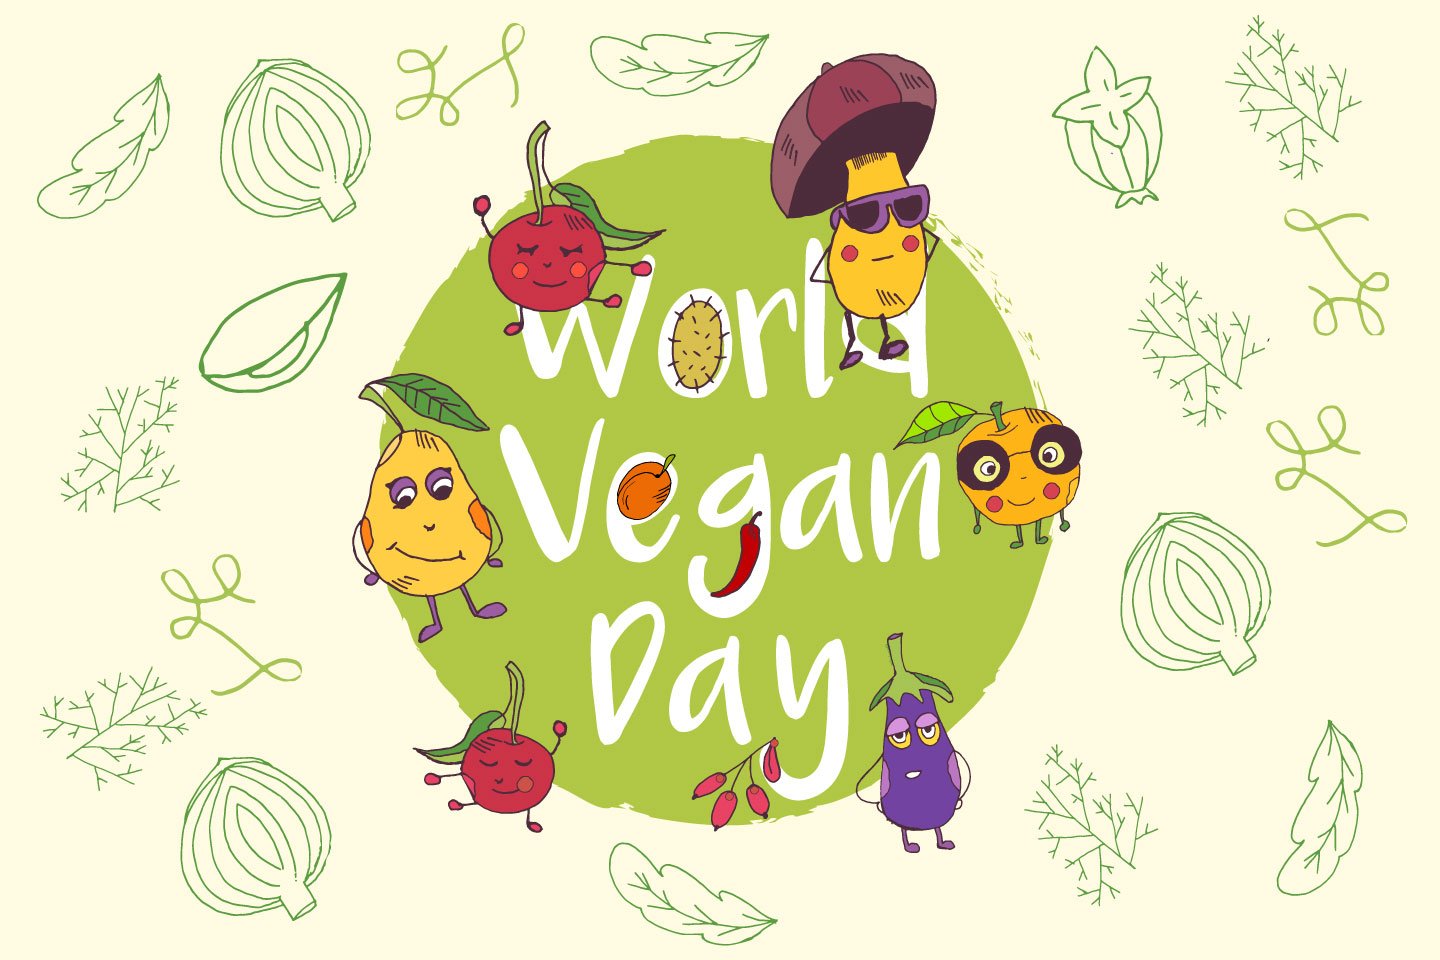 world vegan day illustration postr